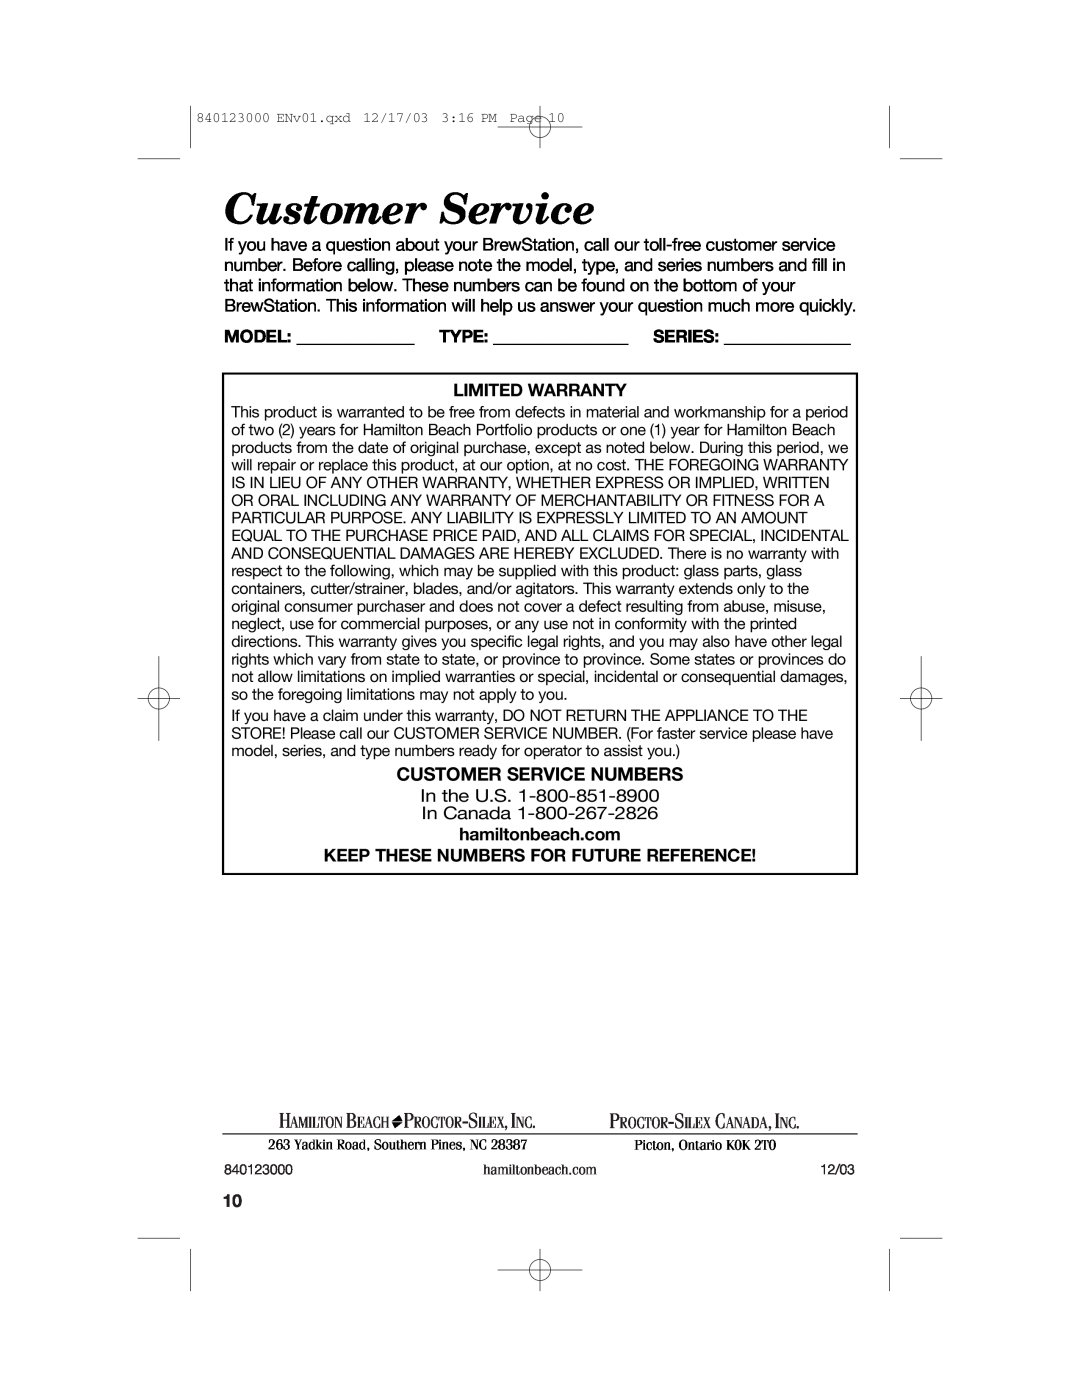 Hamilton Beach 840123000 manual Customer Service Numbers, Model Type Series Limited Warranty, Hamilton Beach 